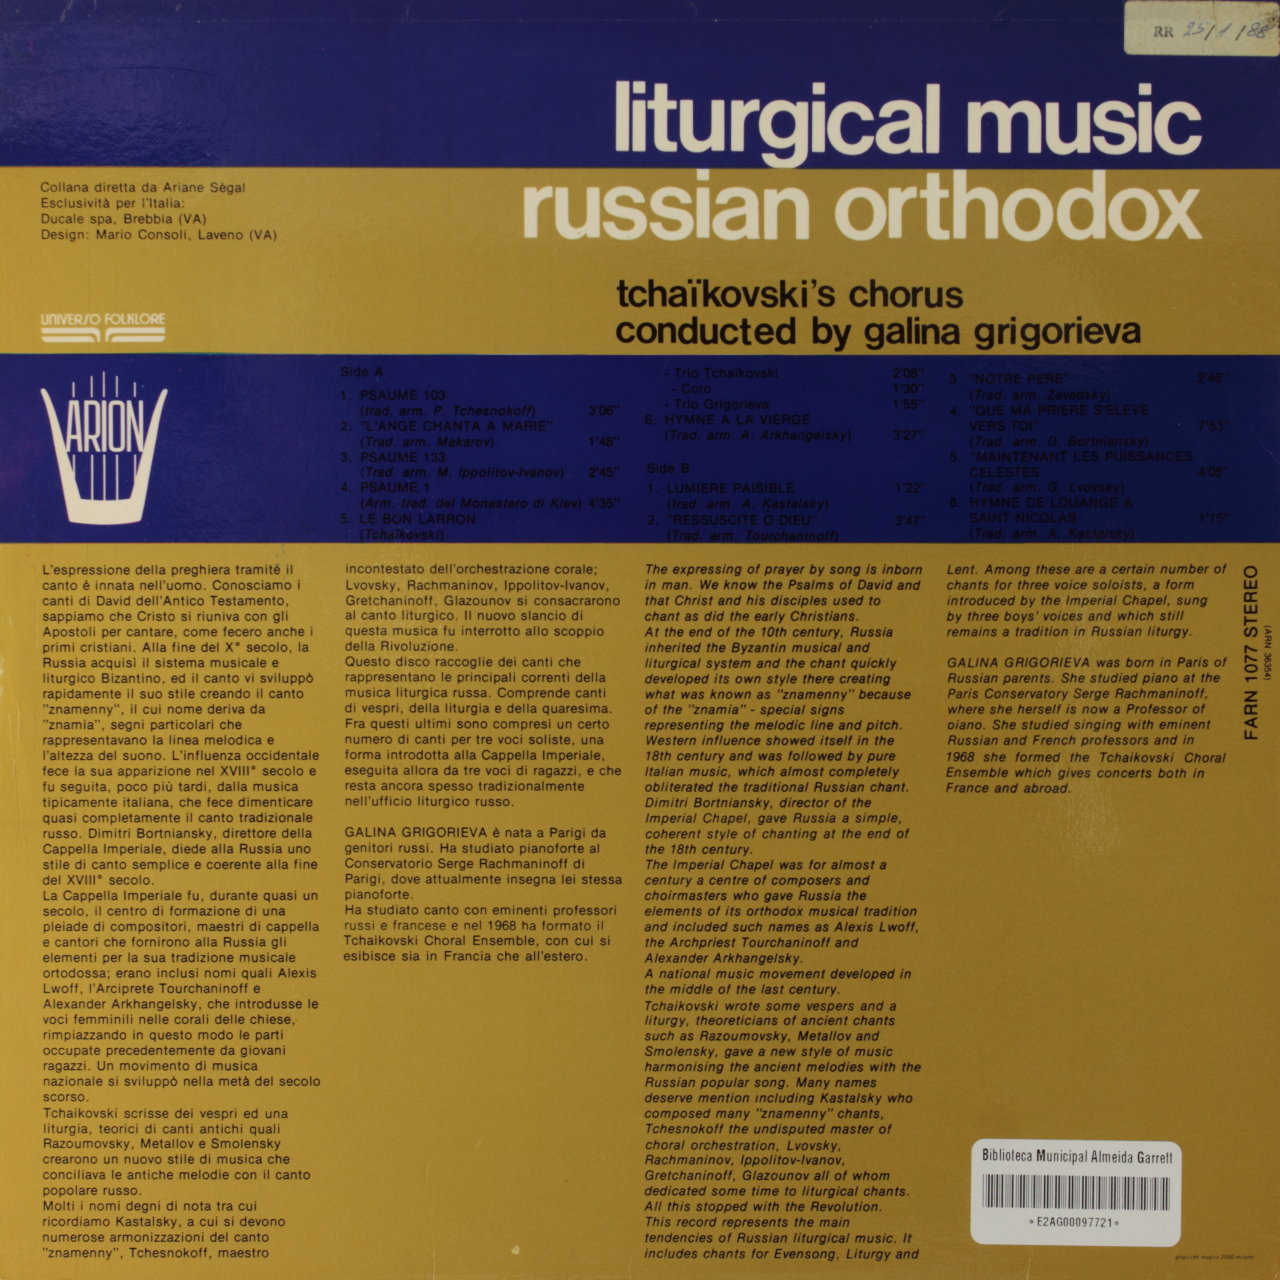 Musica liturgica ortodossa russa